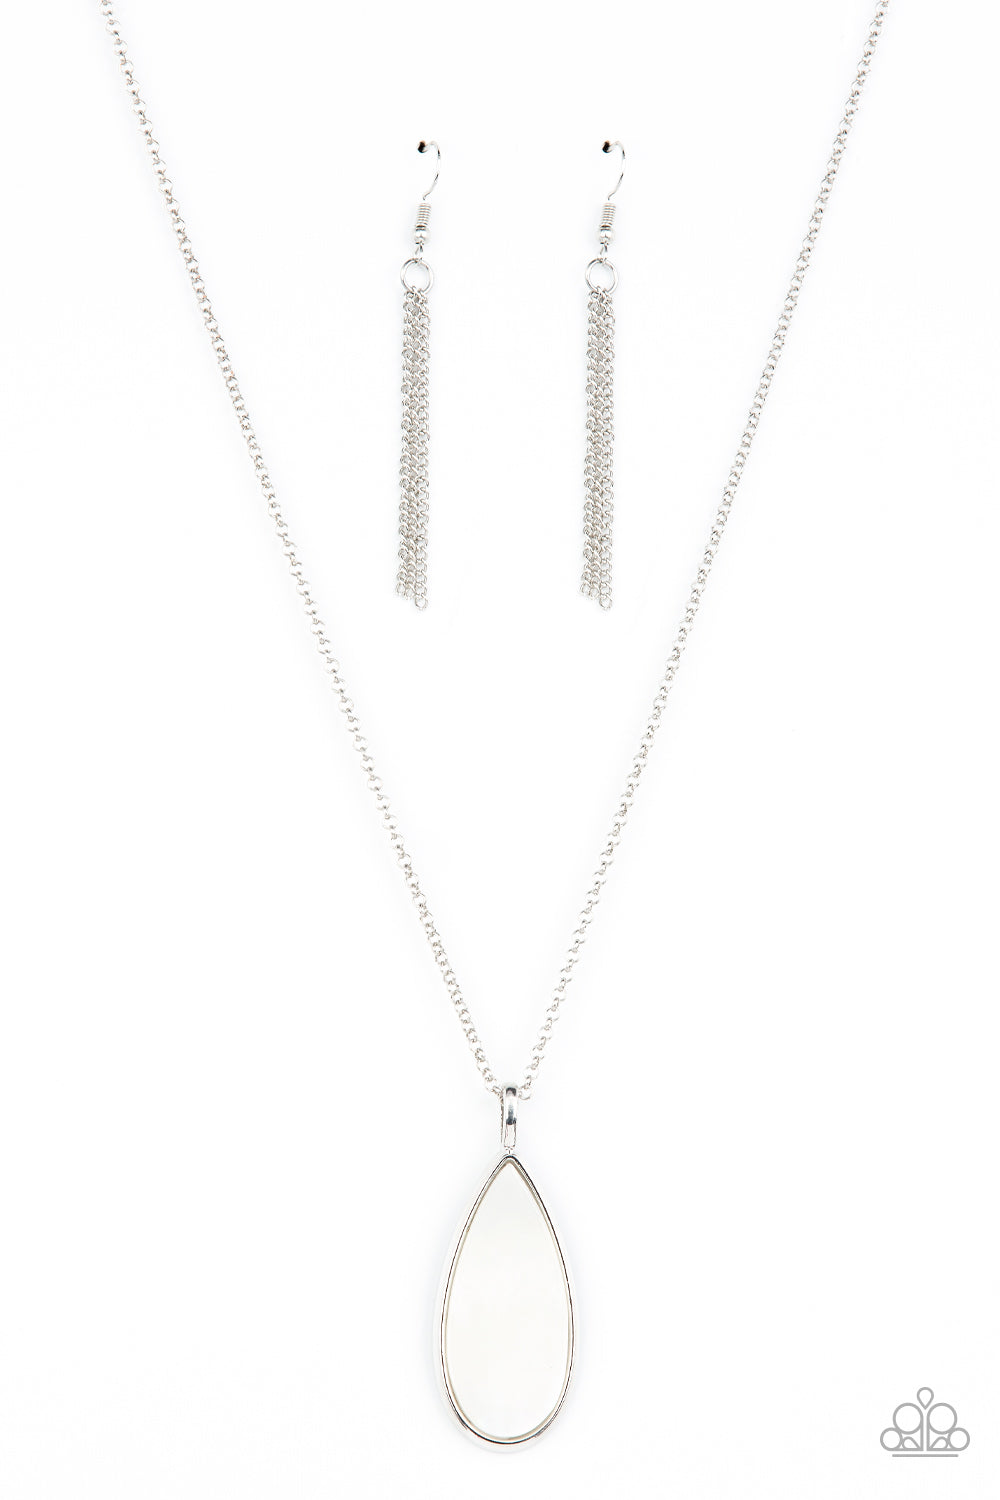 Yacht Ready - white - Paparazzi necklace – JewelryBlingThing